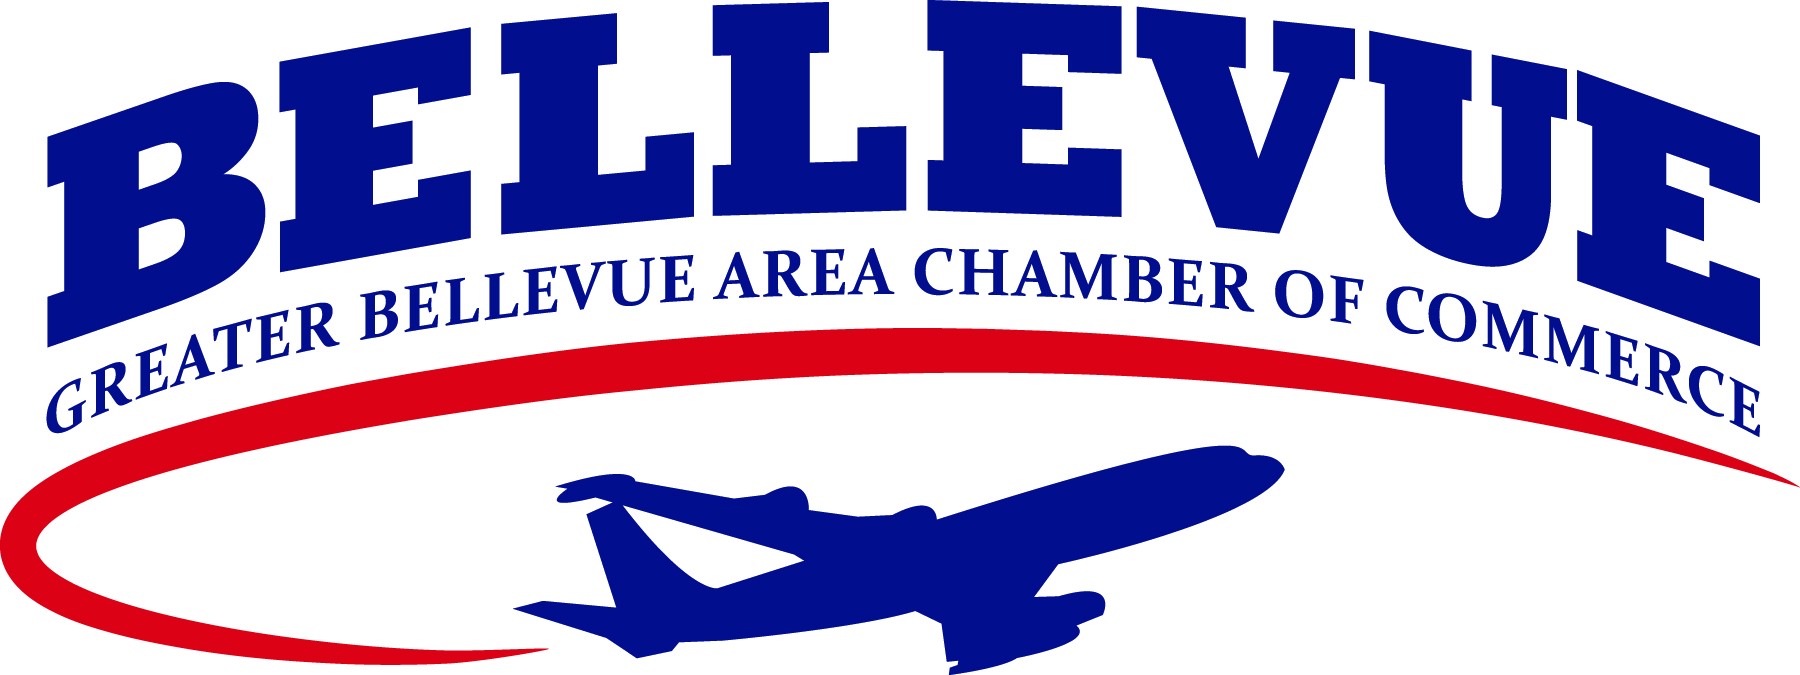 Bellevue Chamber of Commerce